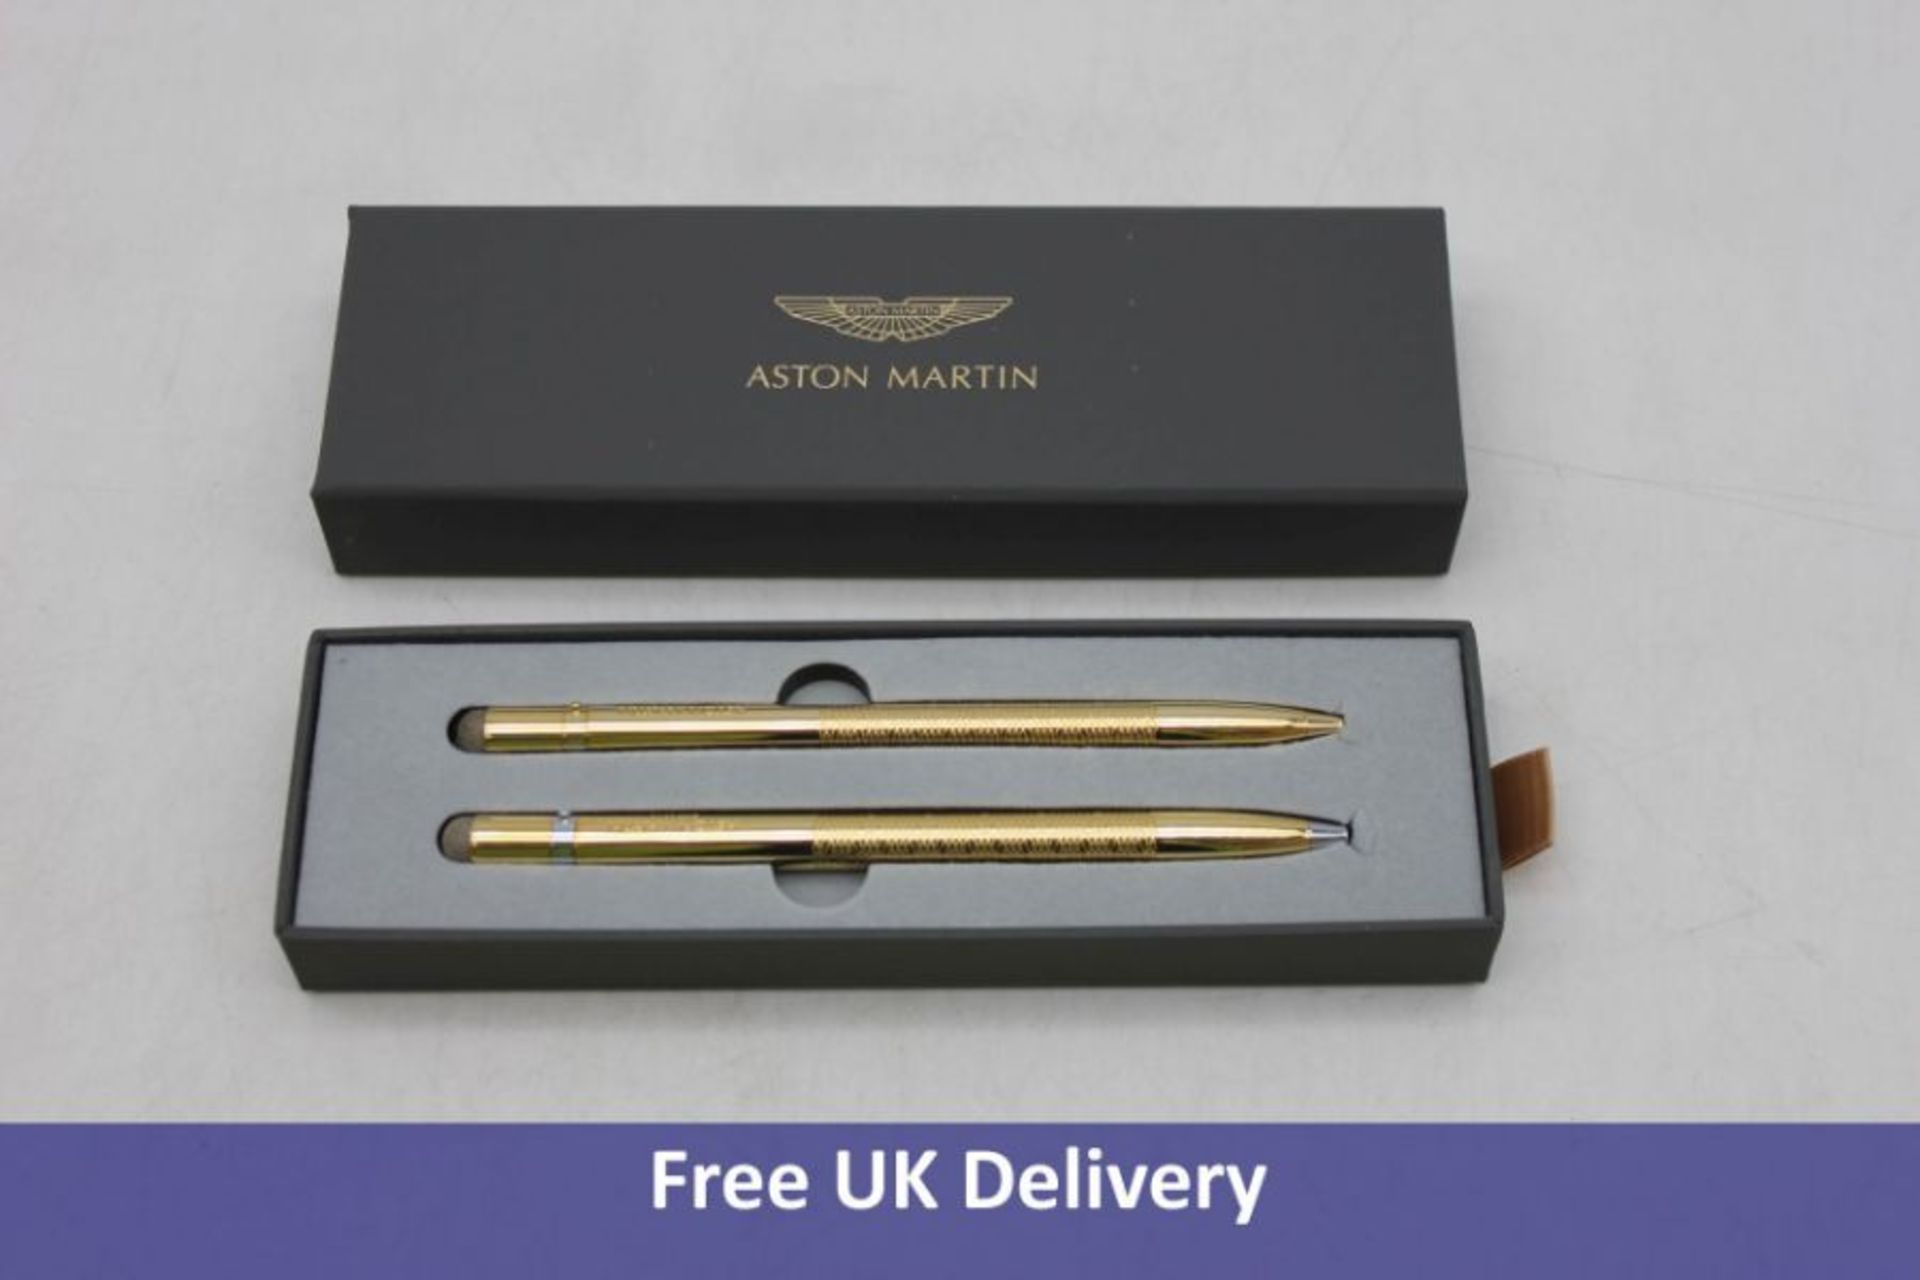 Five Aston Martin Stylus Ball Pen and Roller, Gold